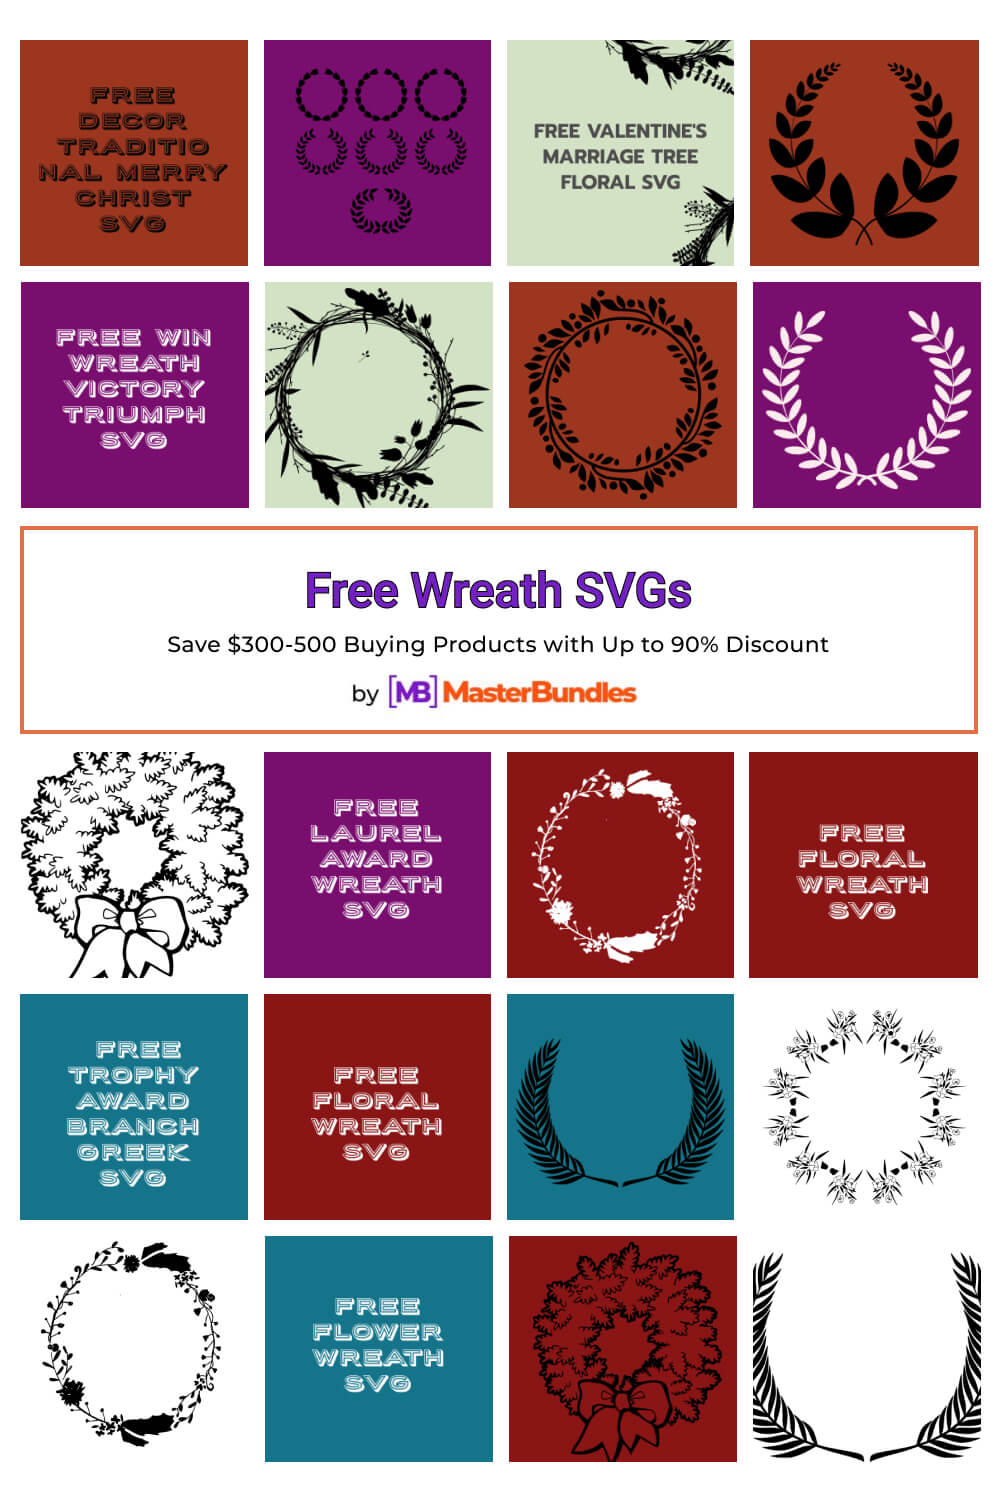 free wreath svgs pinterest image.